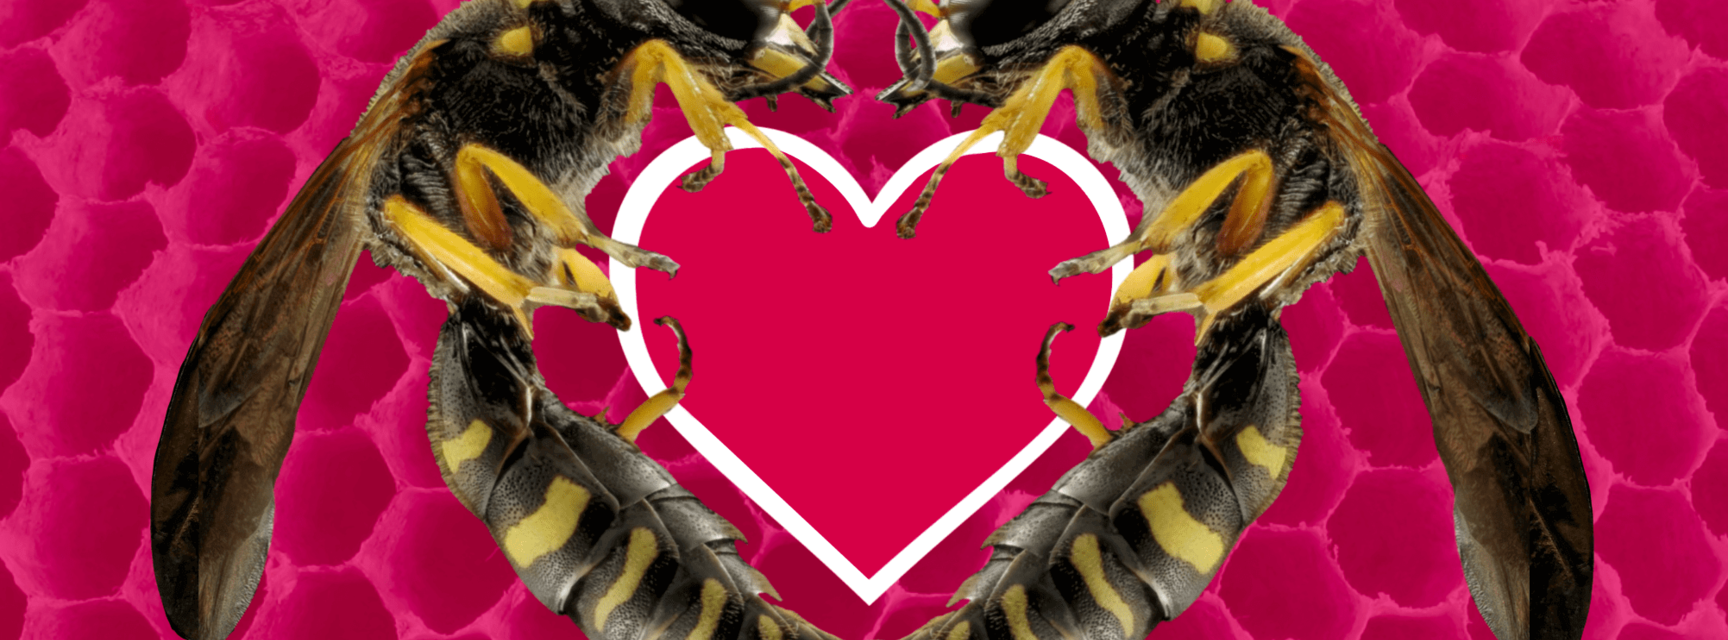 Two wasps clutching a cartoon heart